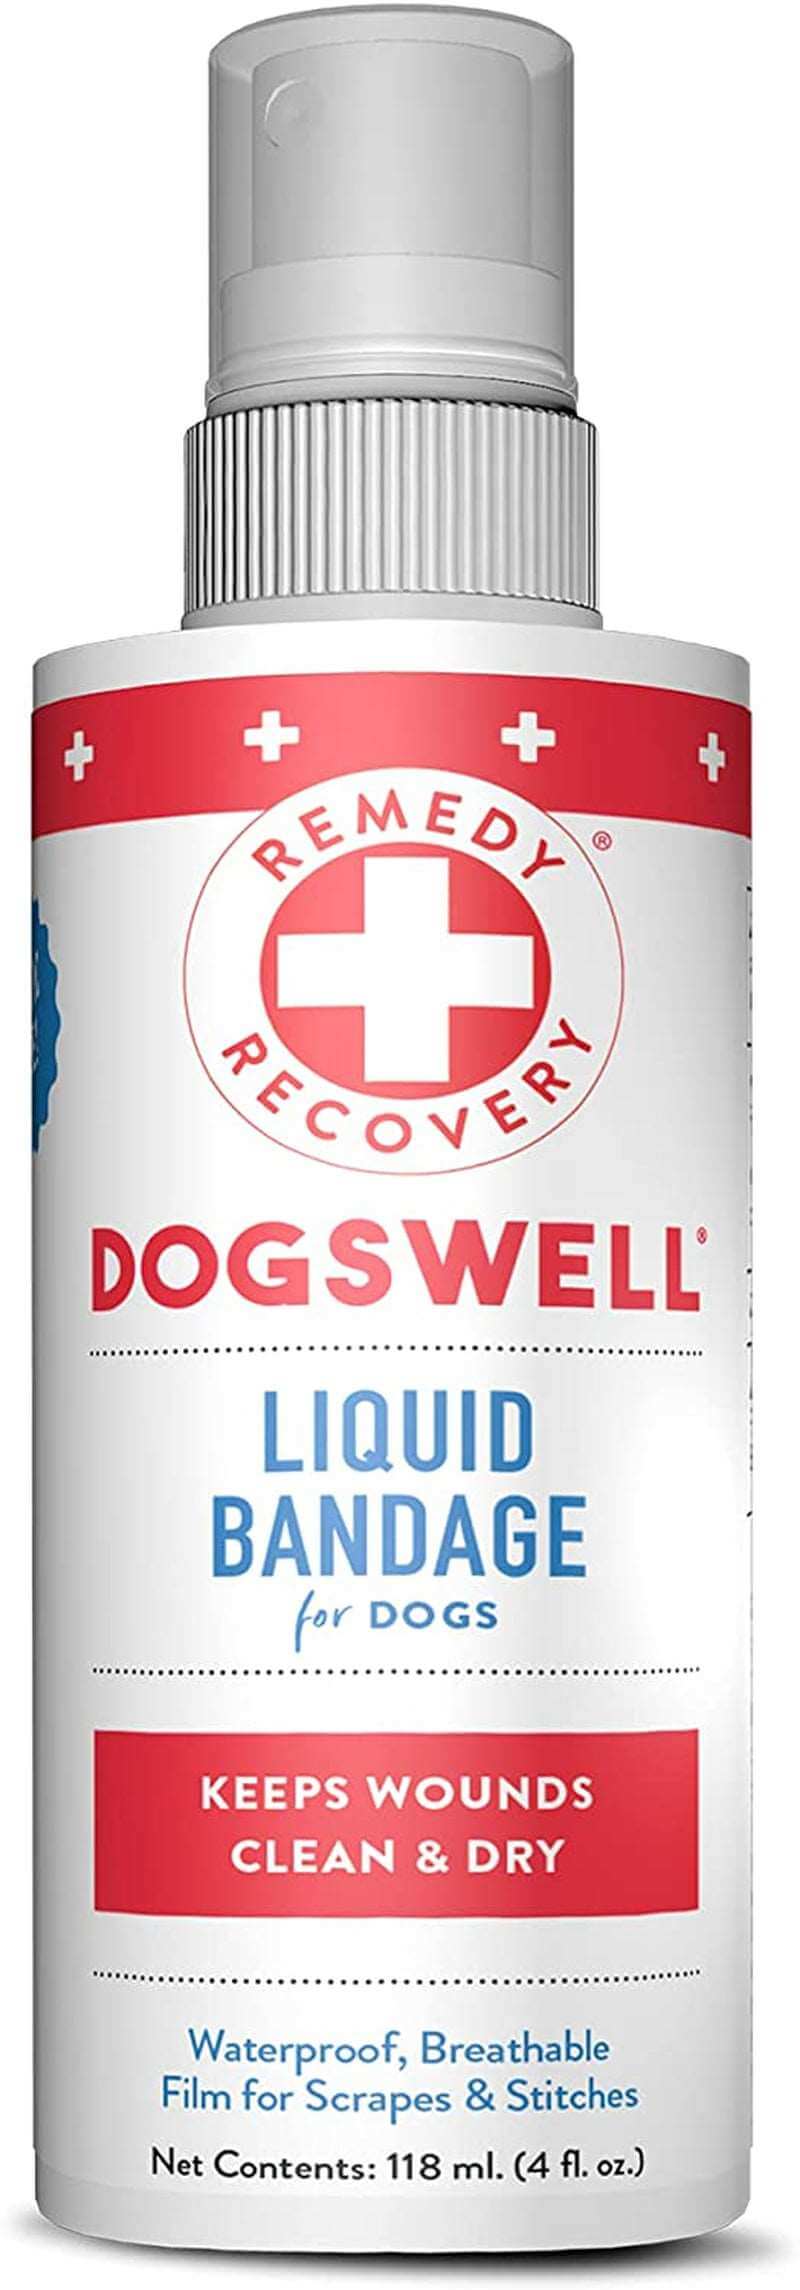  Liquid Bandage for Dogs